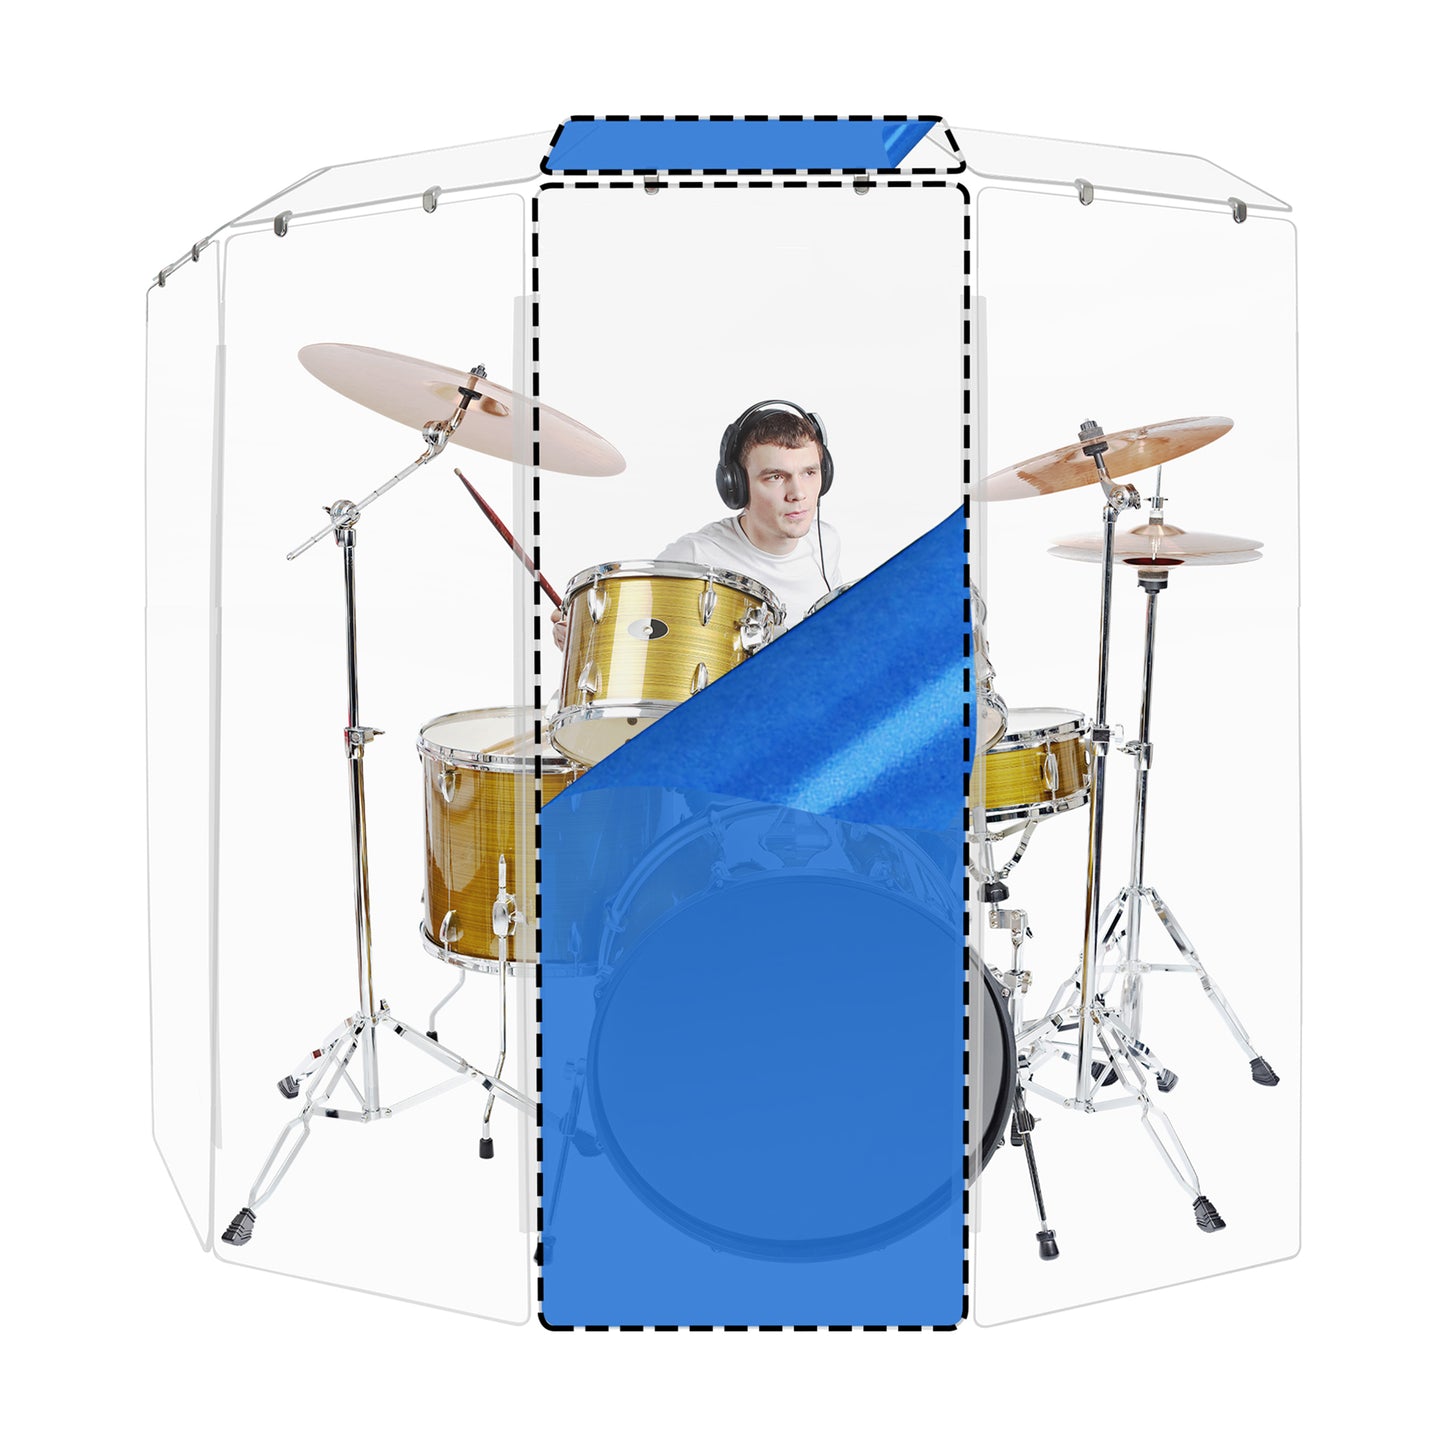 Single Panel Drum Shield W/ Deflector